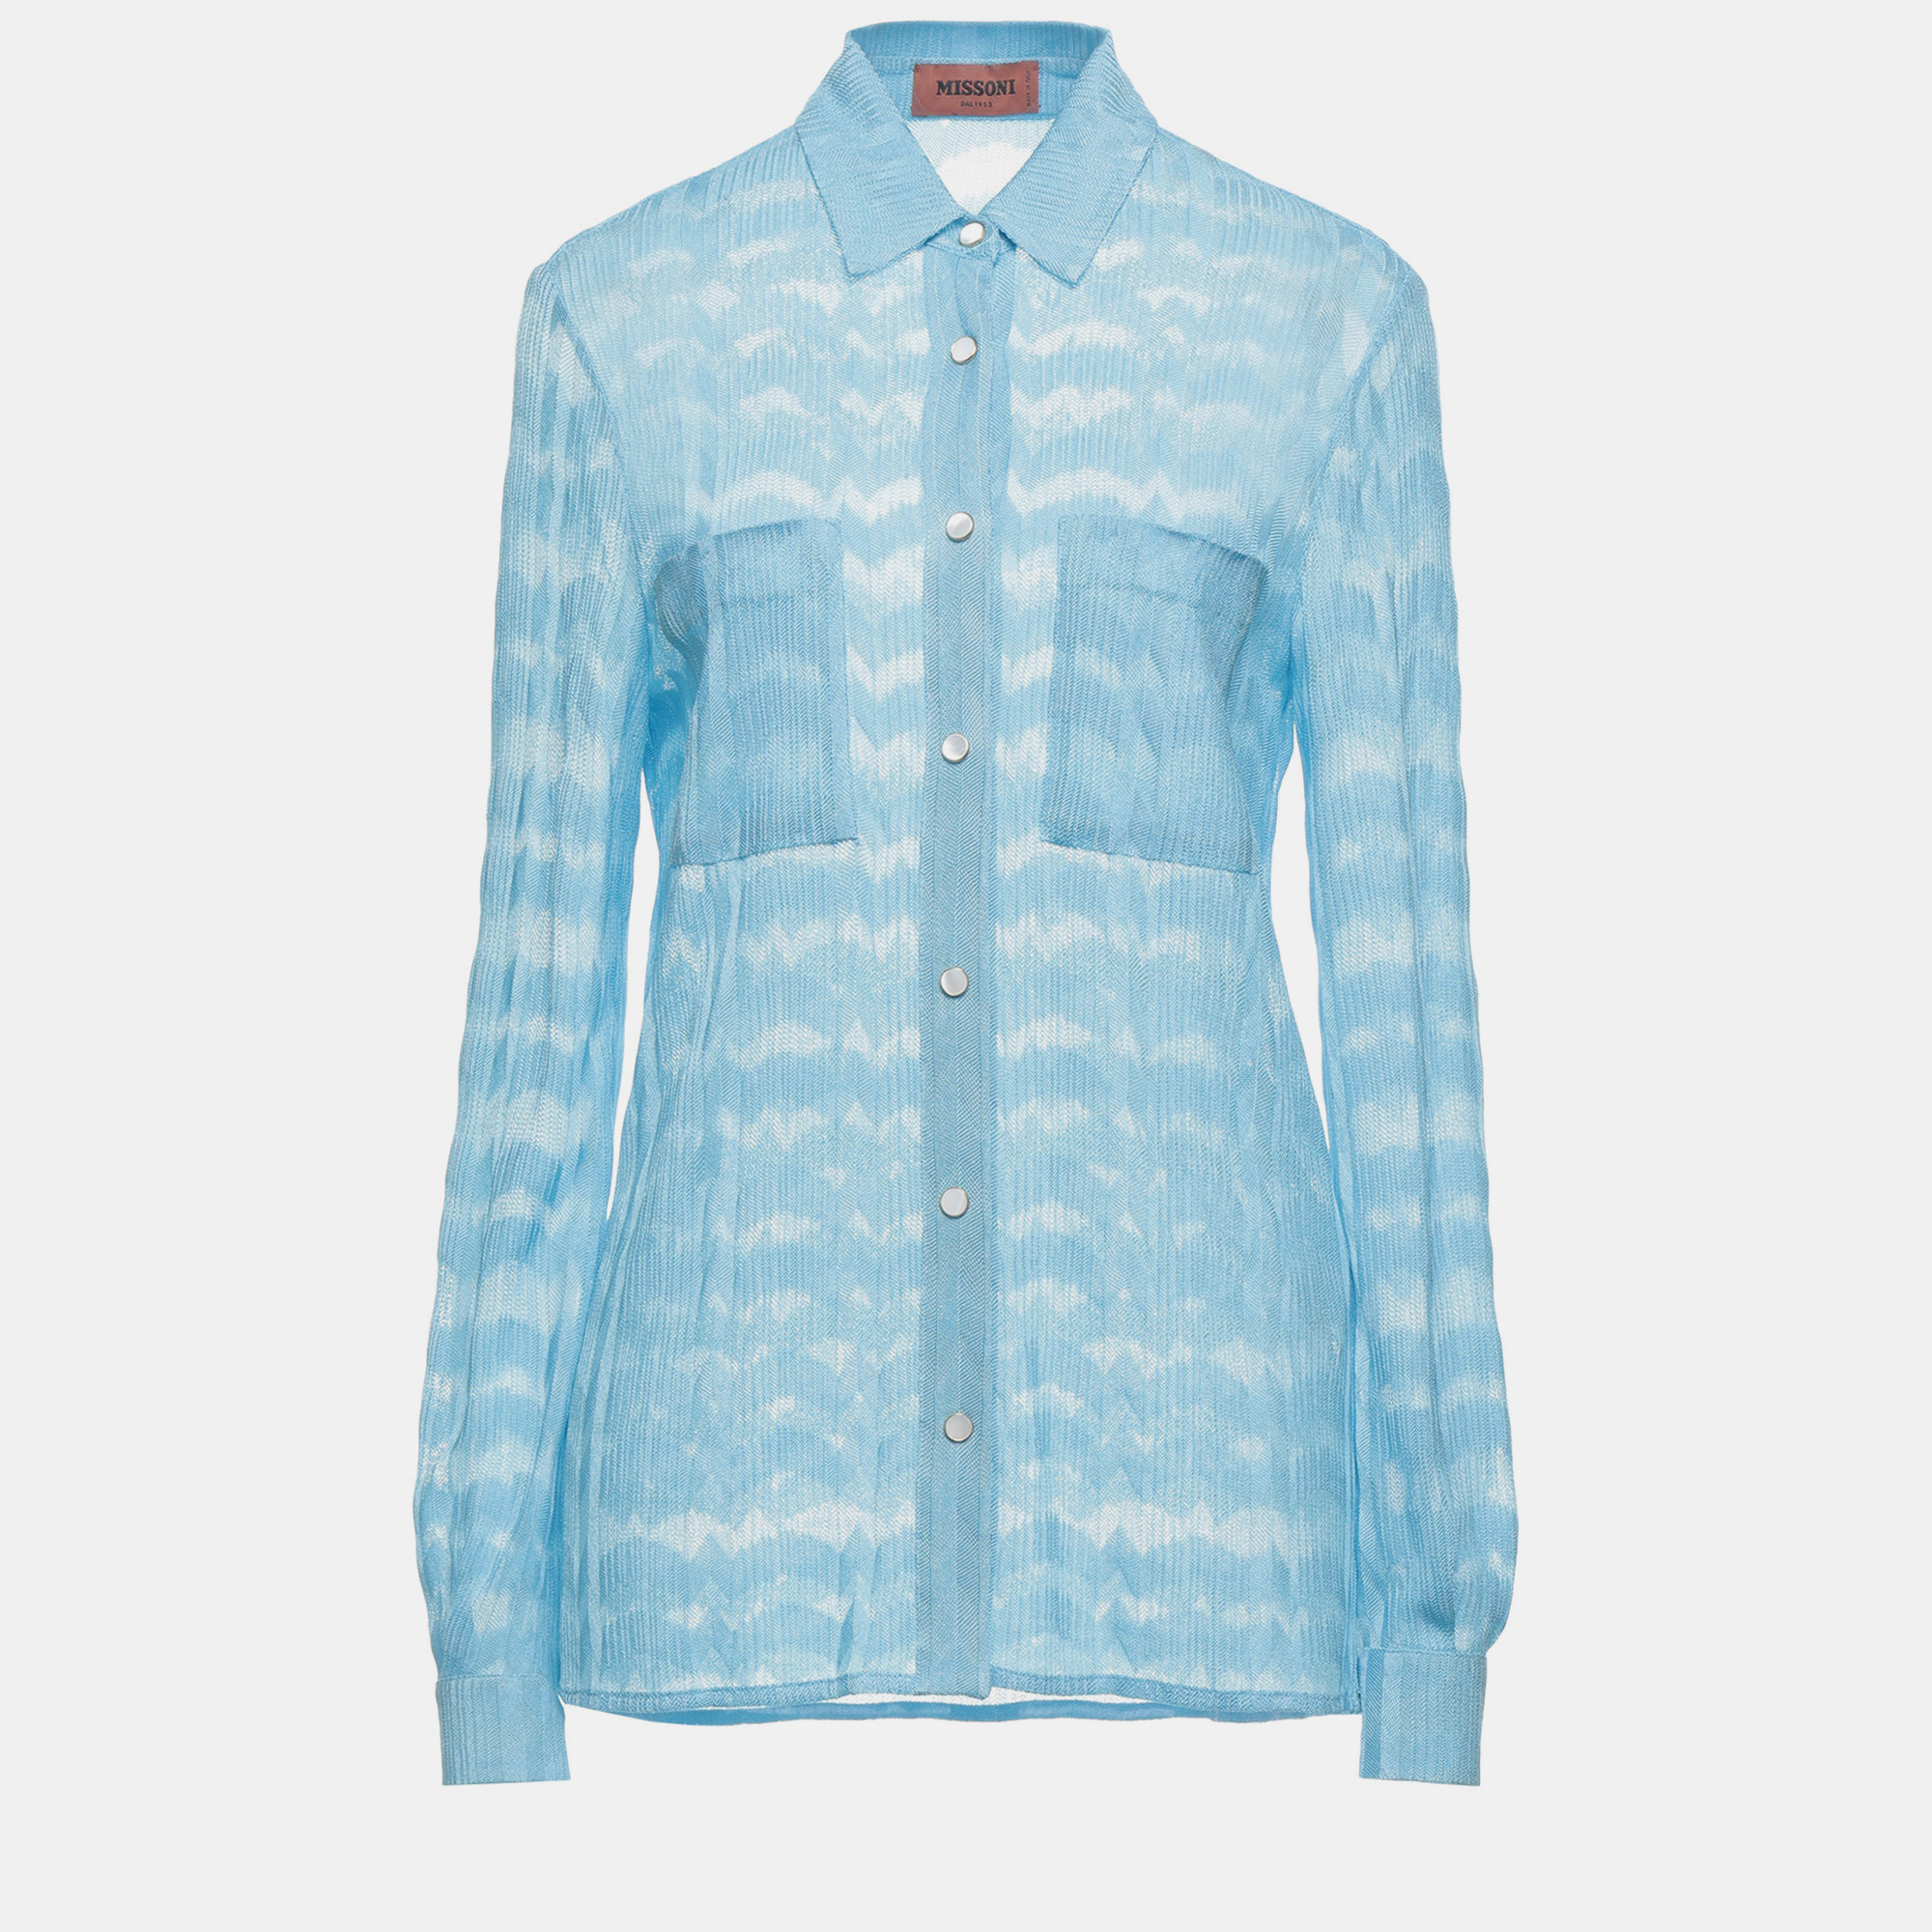 Missoni blue chevron patterned knit shirt s (it 40)